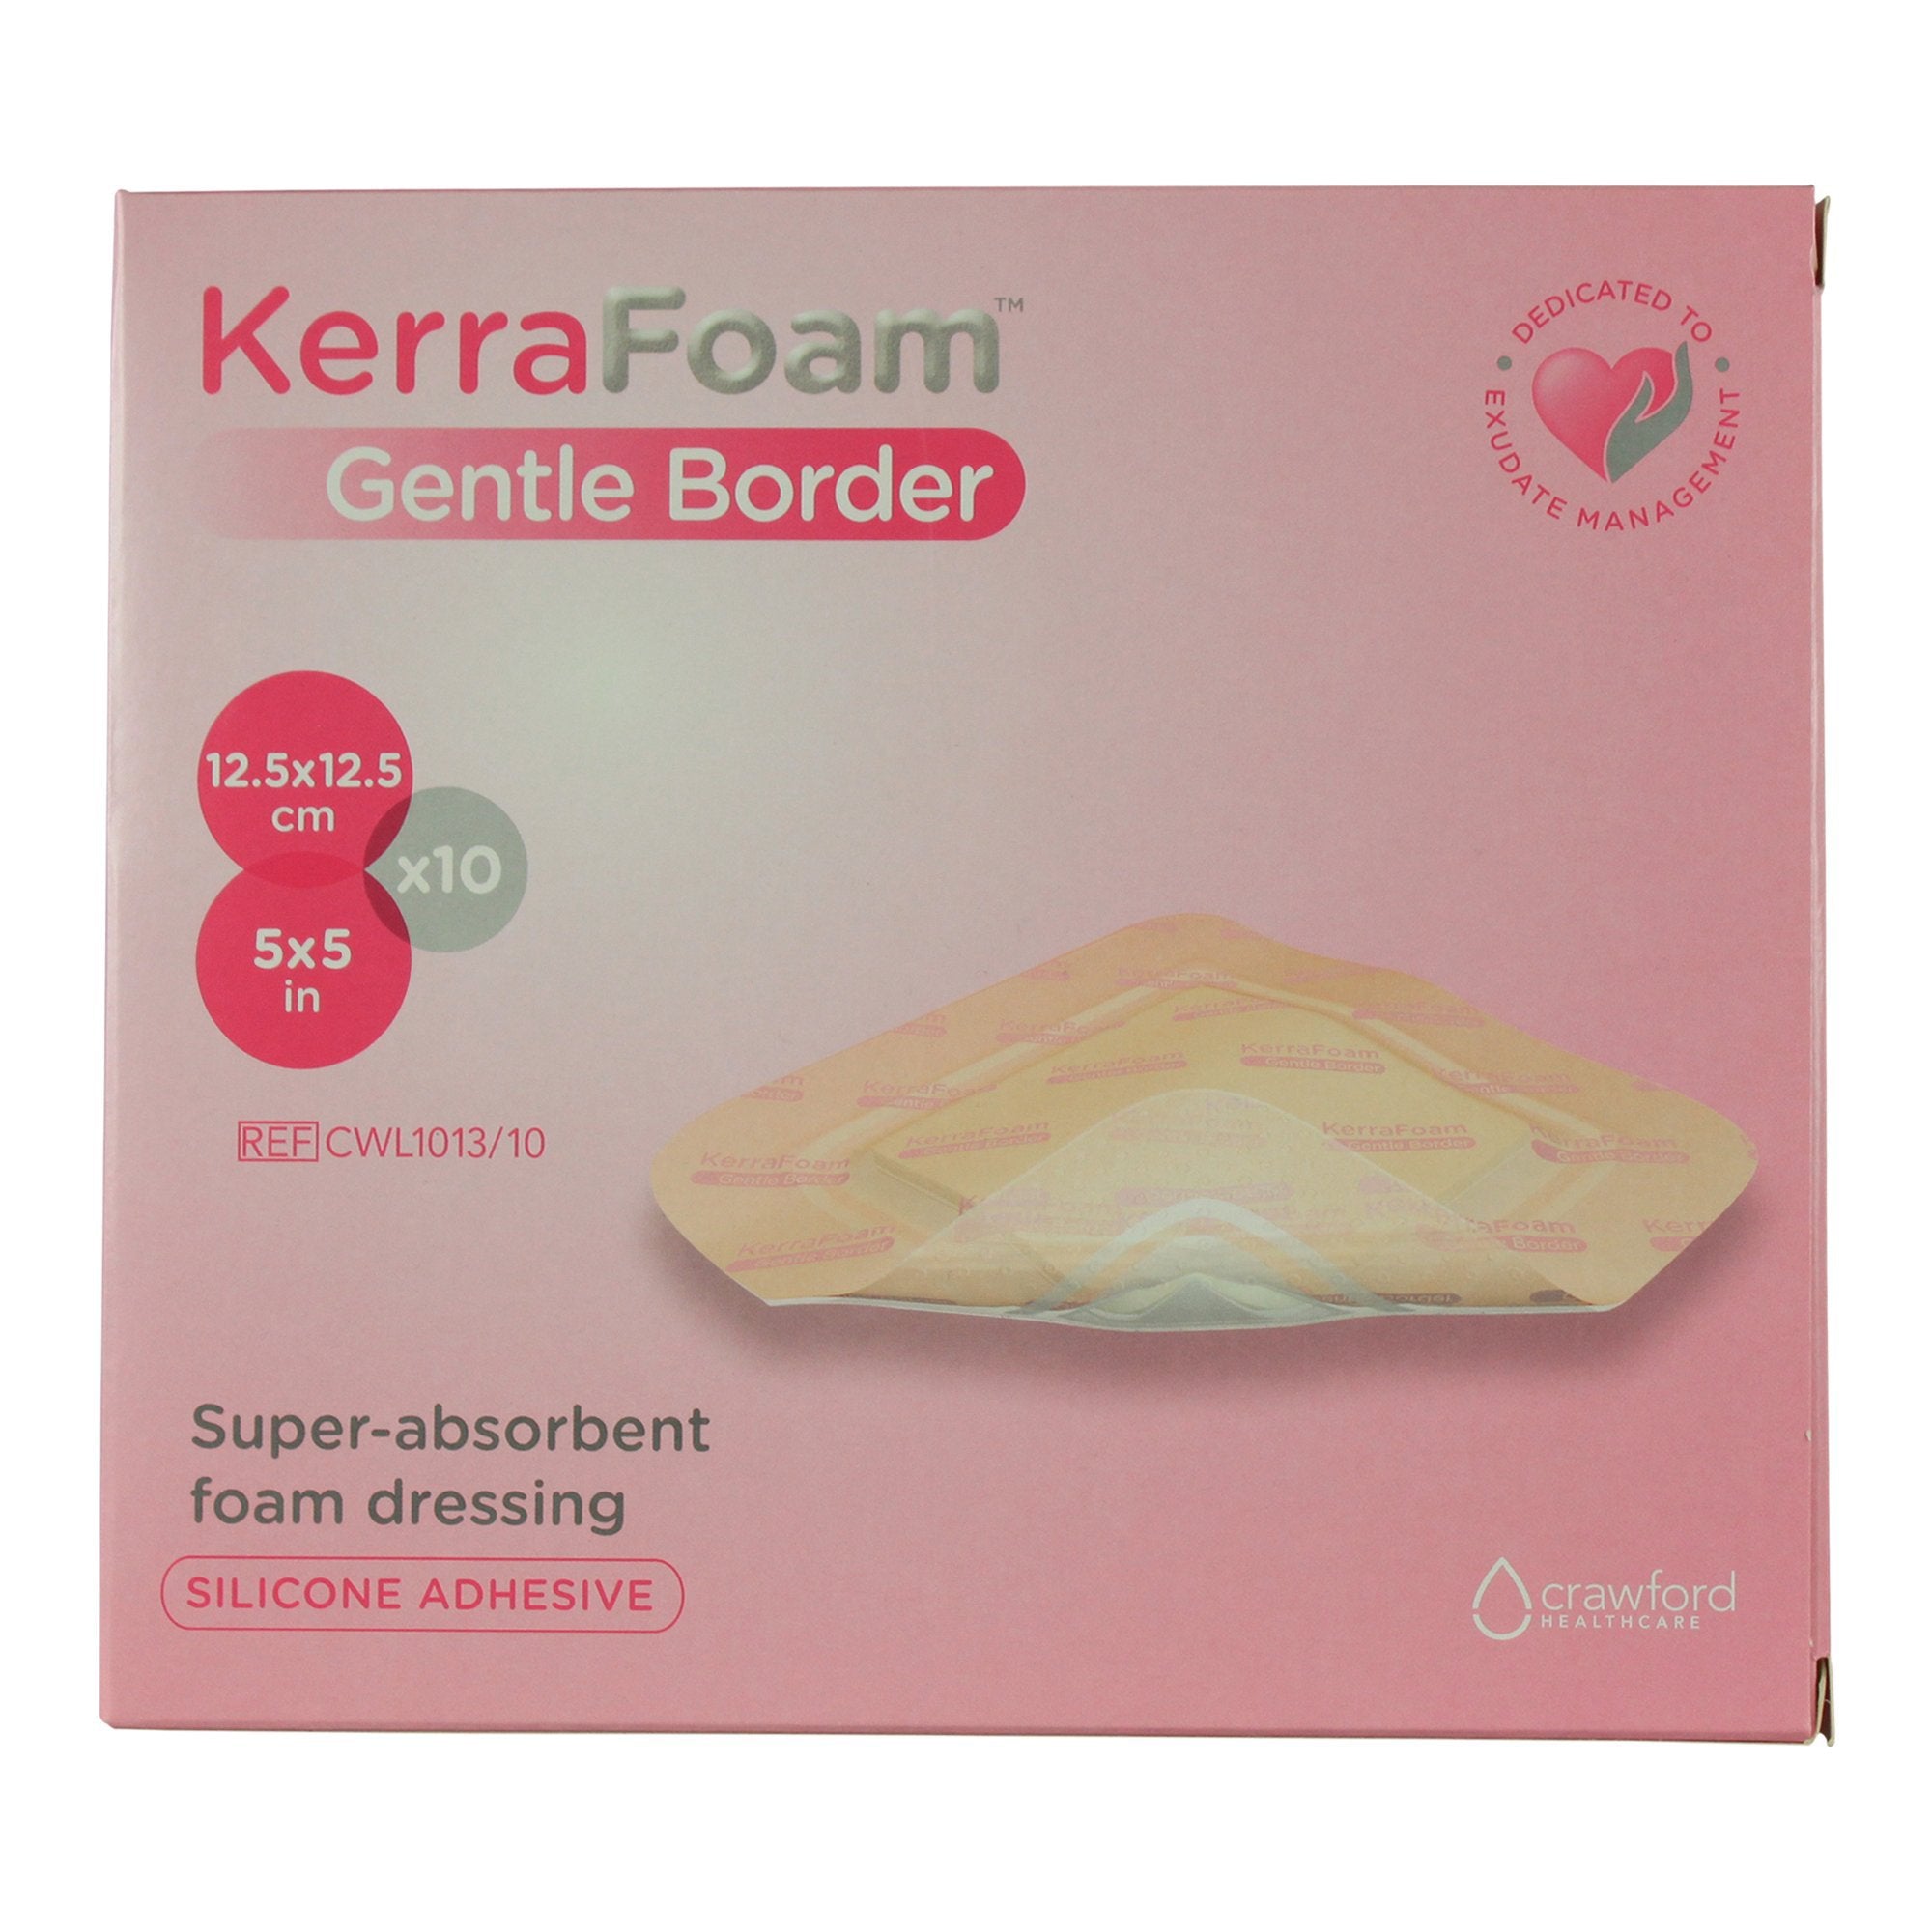 Foam Dressing KerraFoam™ Gentle Border 5 X 5 Inch With Border Film Backing Silicone Adhesive Square Sterile